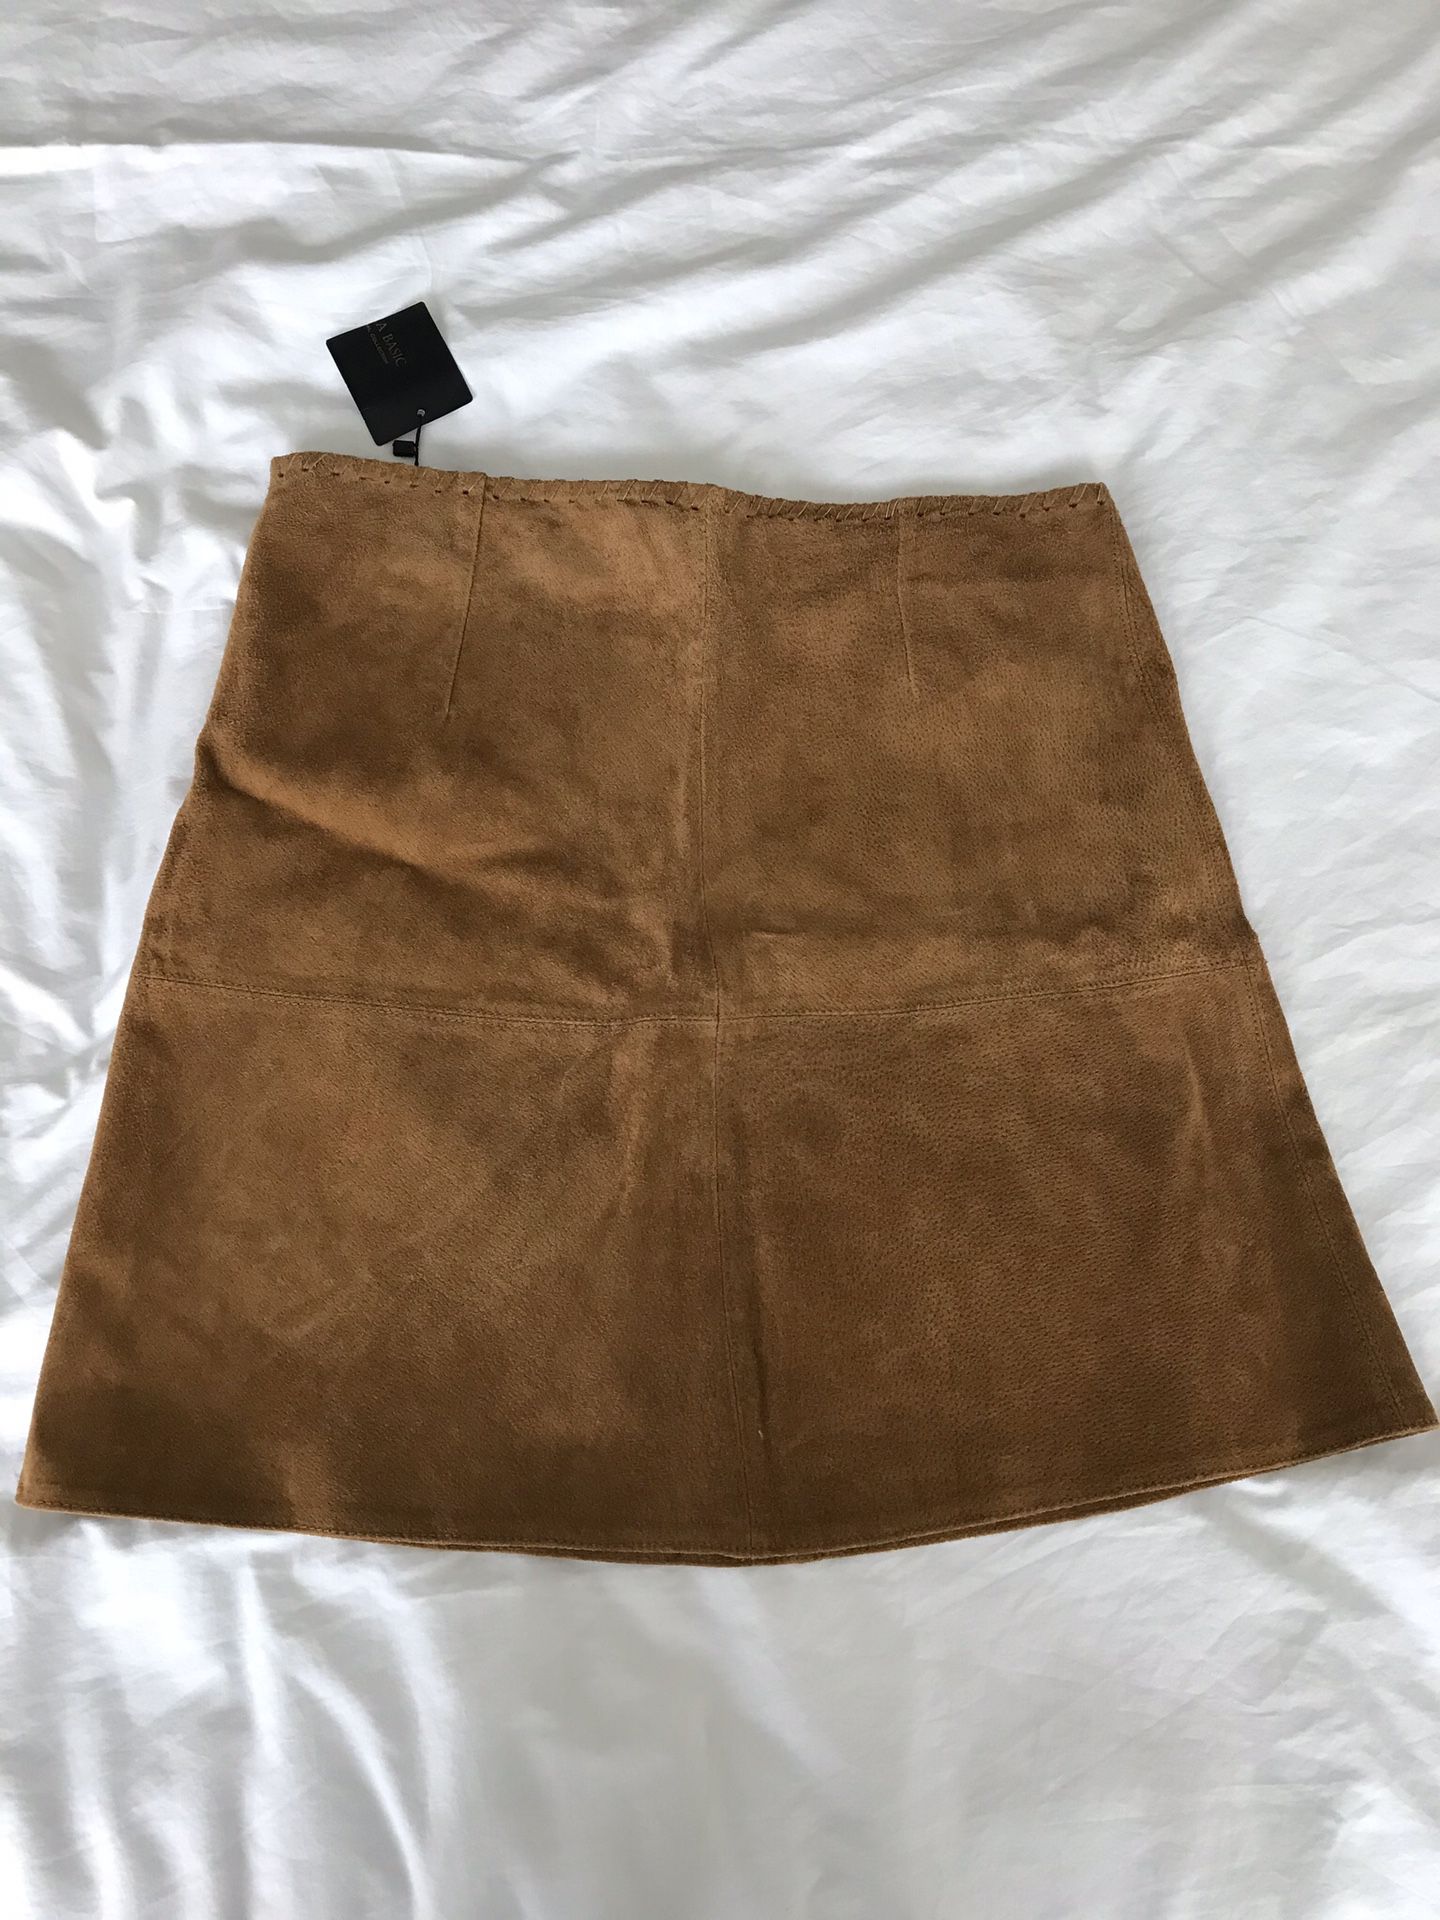 NEW Zara leather skirt